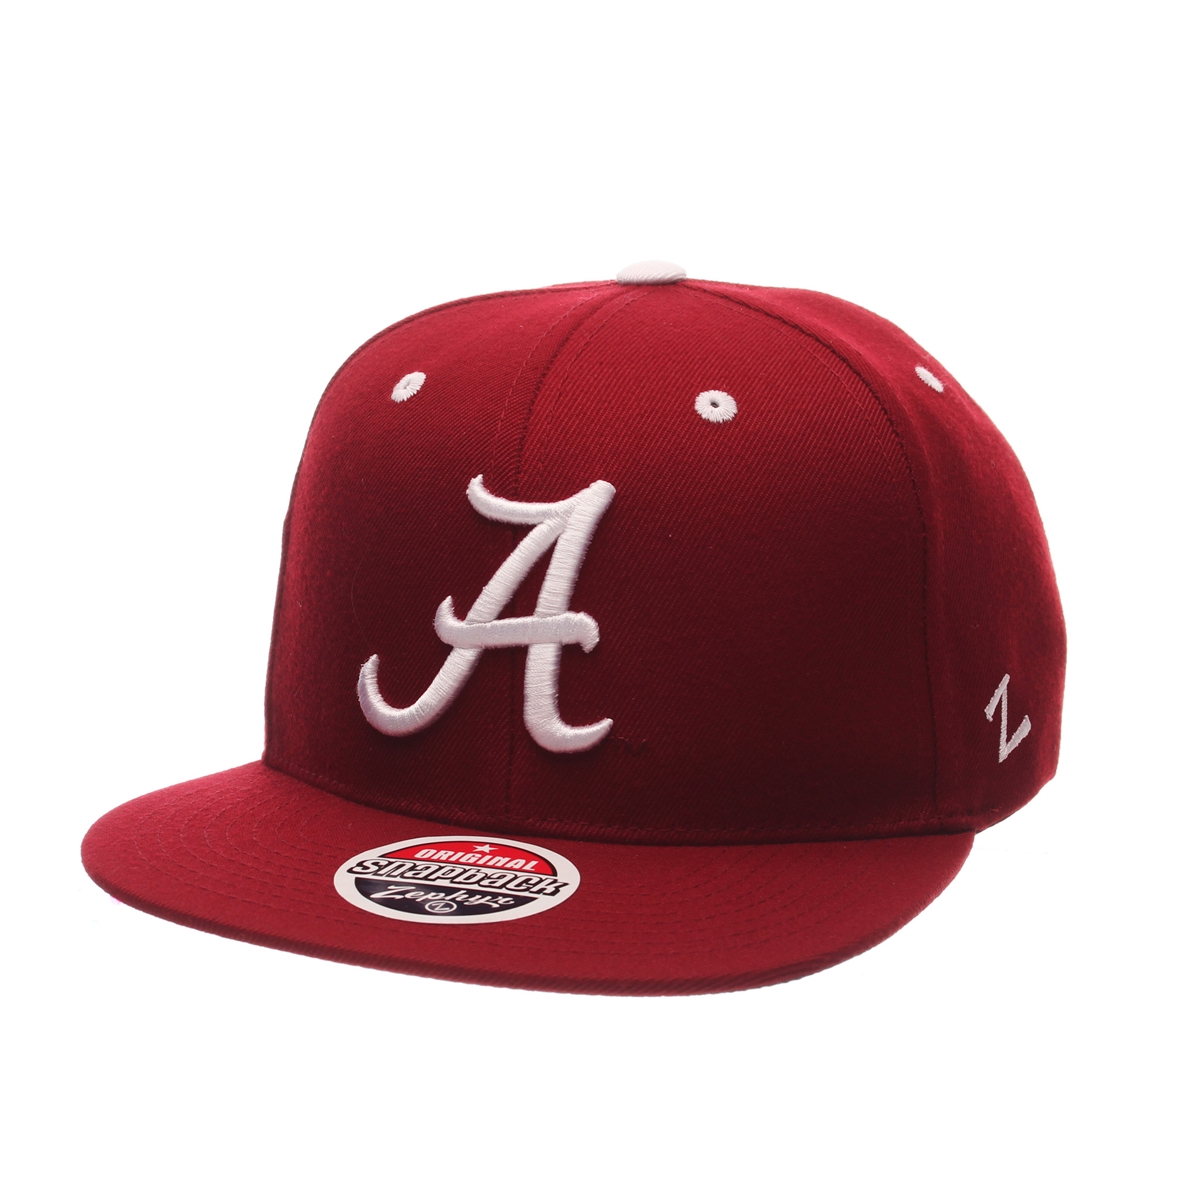 Alabama Crimson Tide Snapback Cap | Alabama Snapback Hat by Zephyr ...